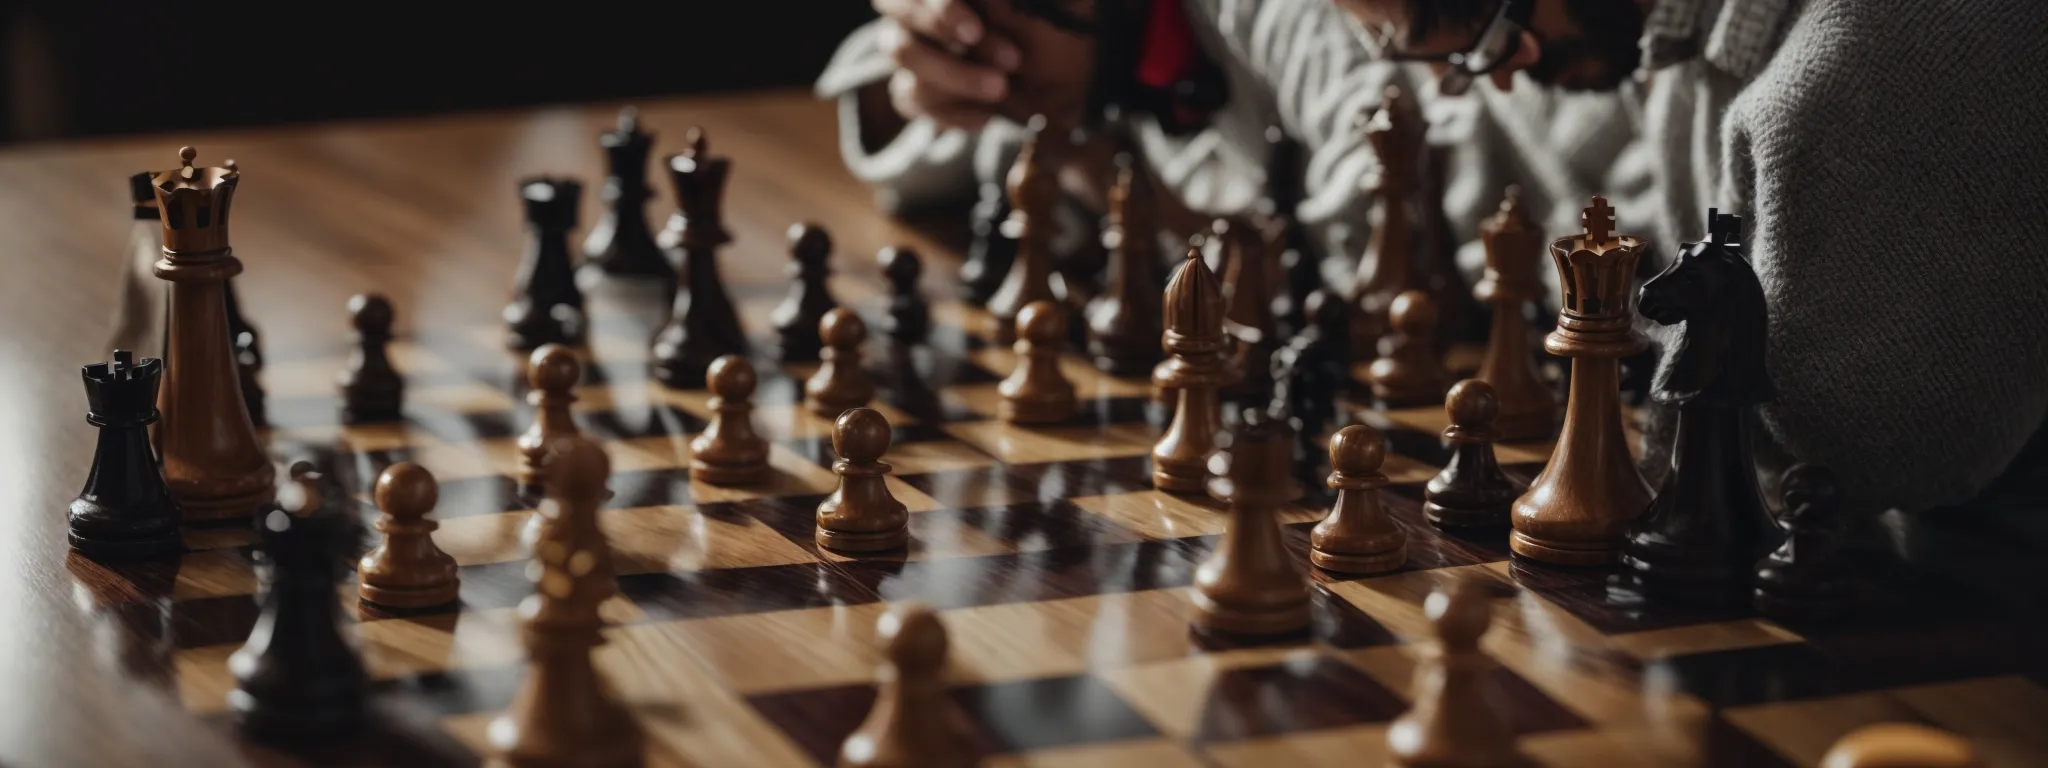 a chess master contemplating a strategic move on a complex game board.